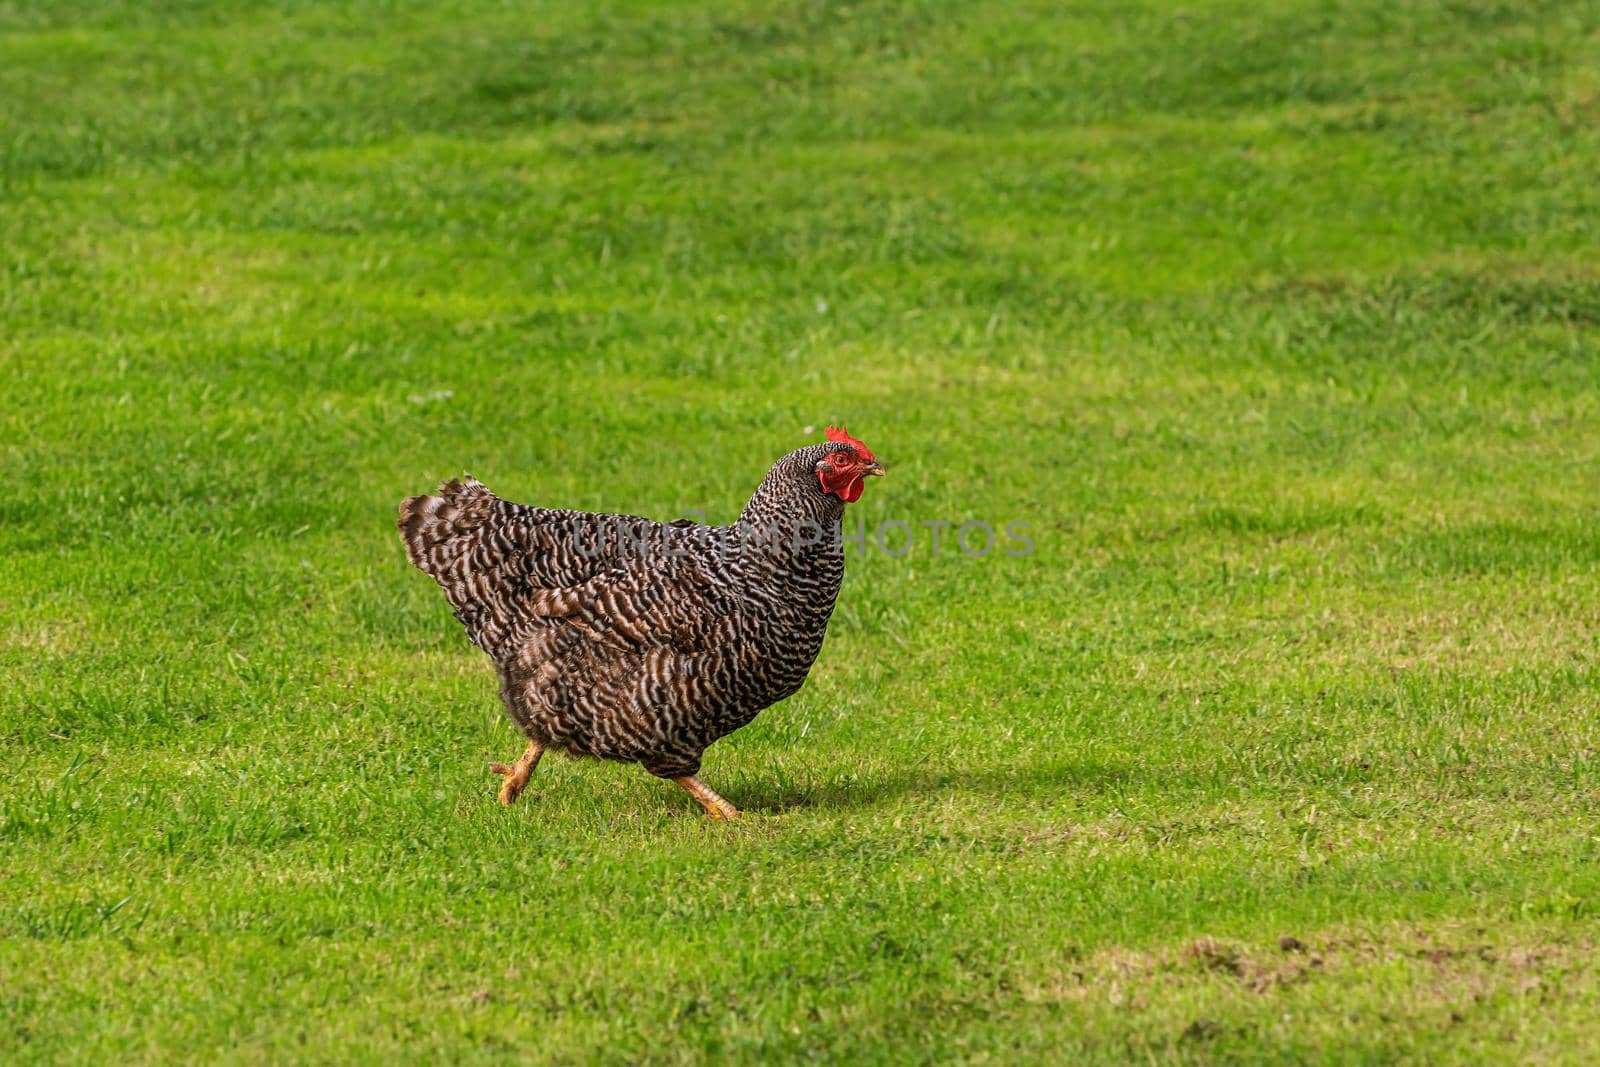 Chicken in the Yard by SNR